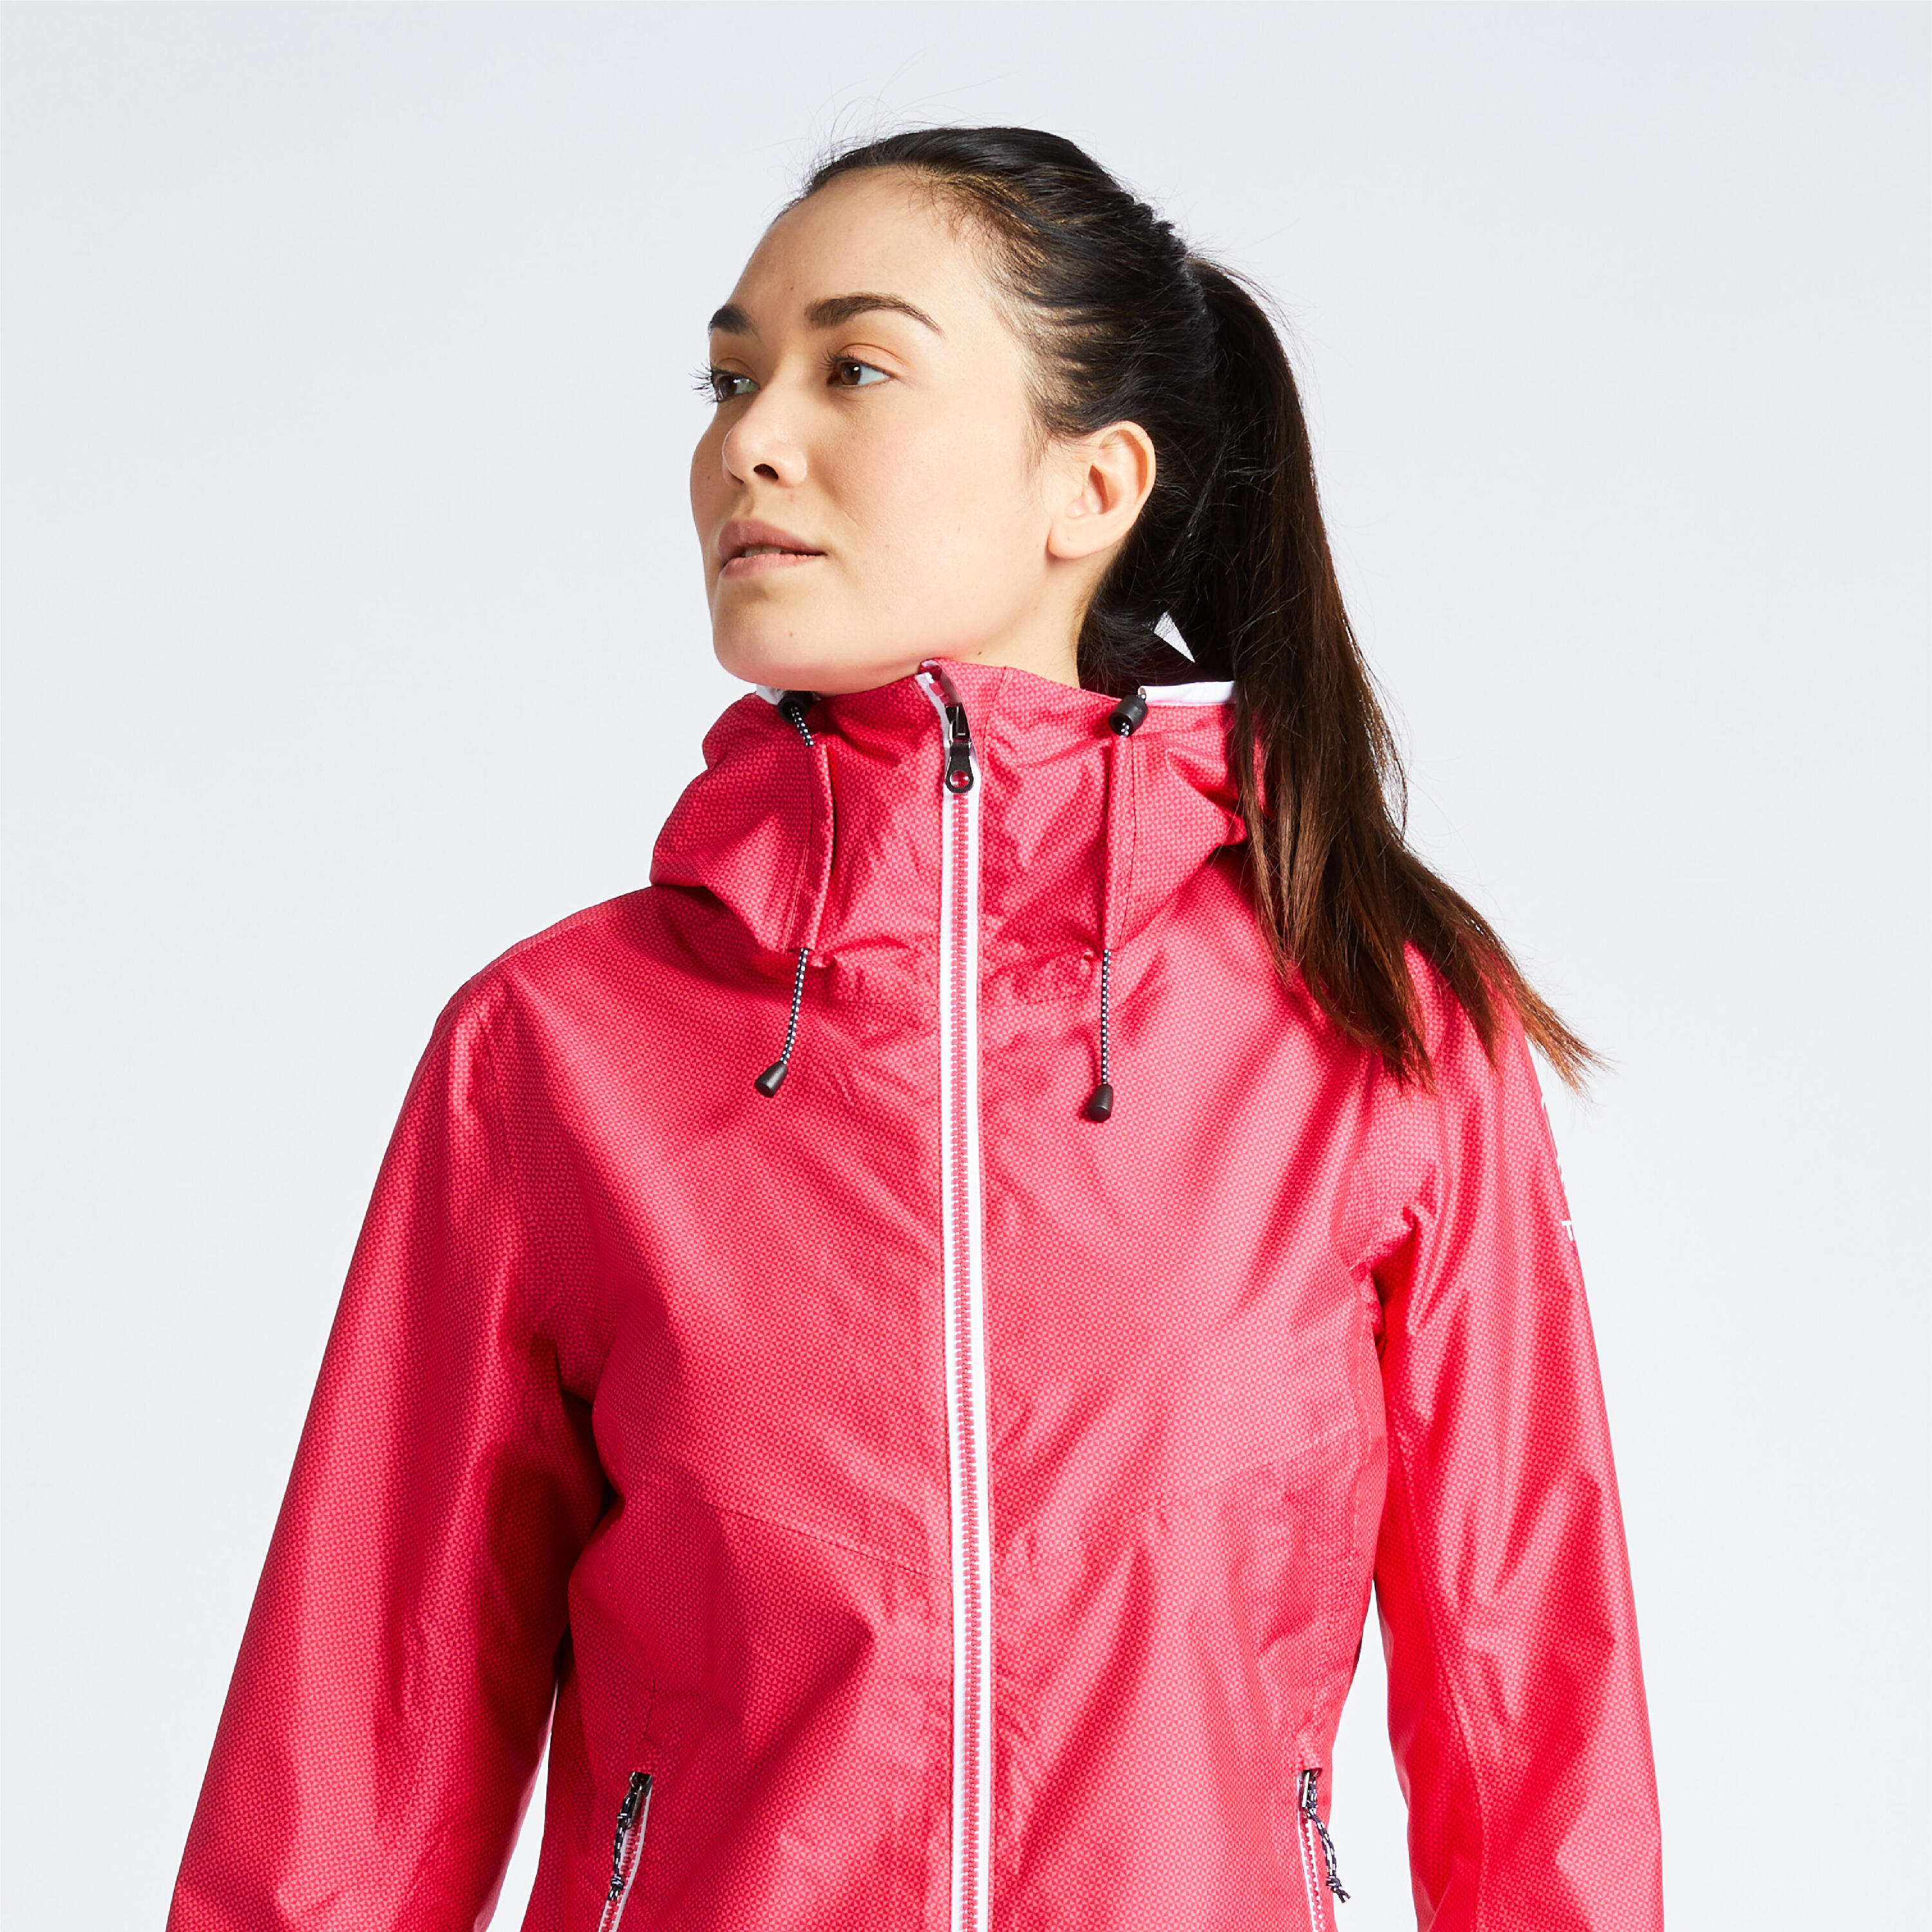 Women's waterproof sailing jacket 100 - All Over Pink 4/9